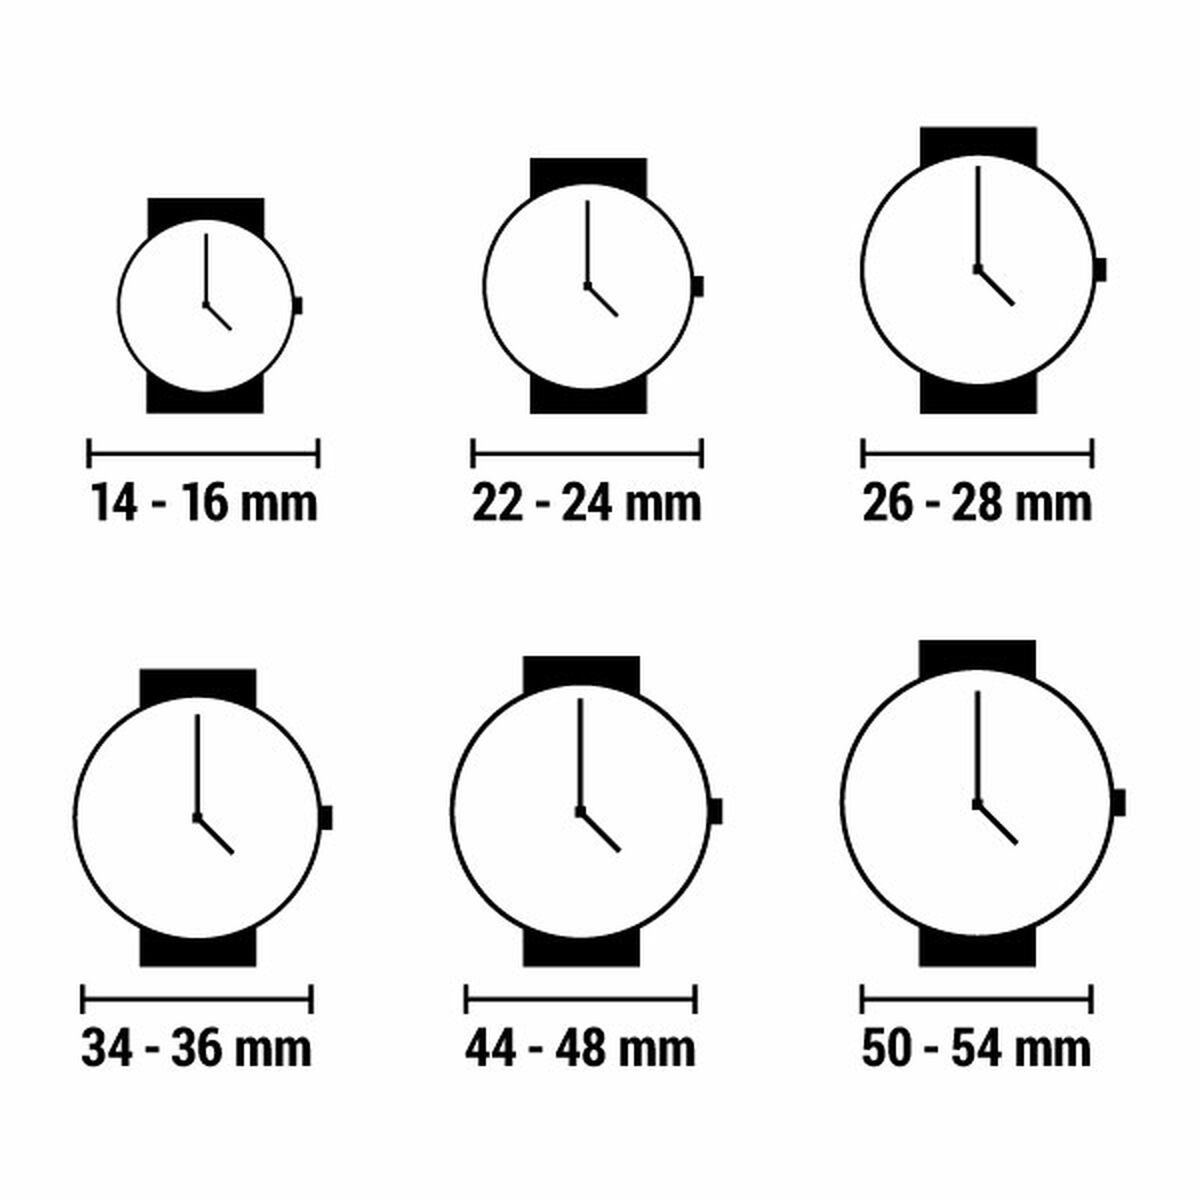 Horloge Dames Mark Maddox MC7101-07 (Ø 33 mm)